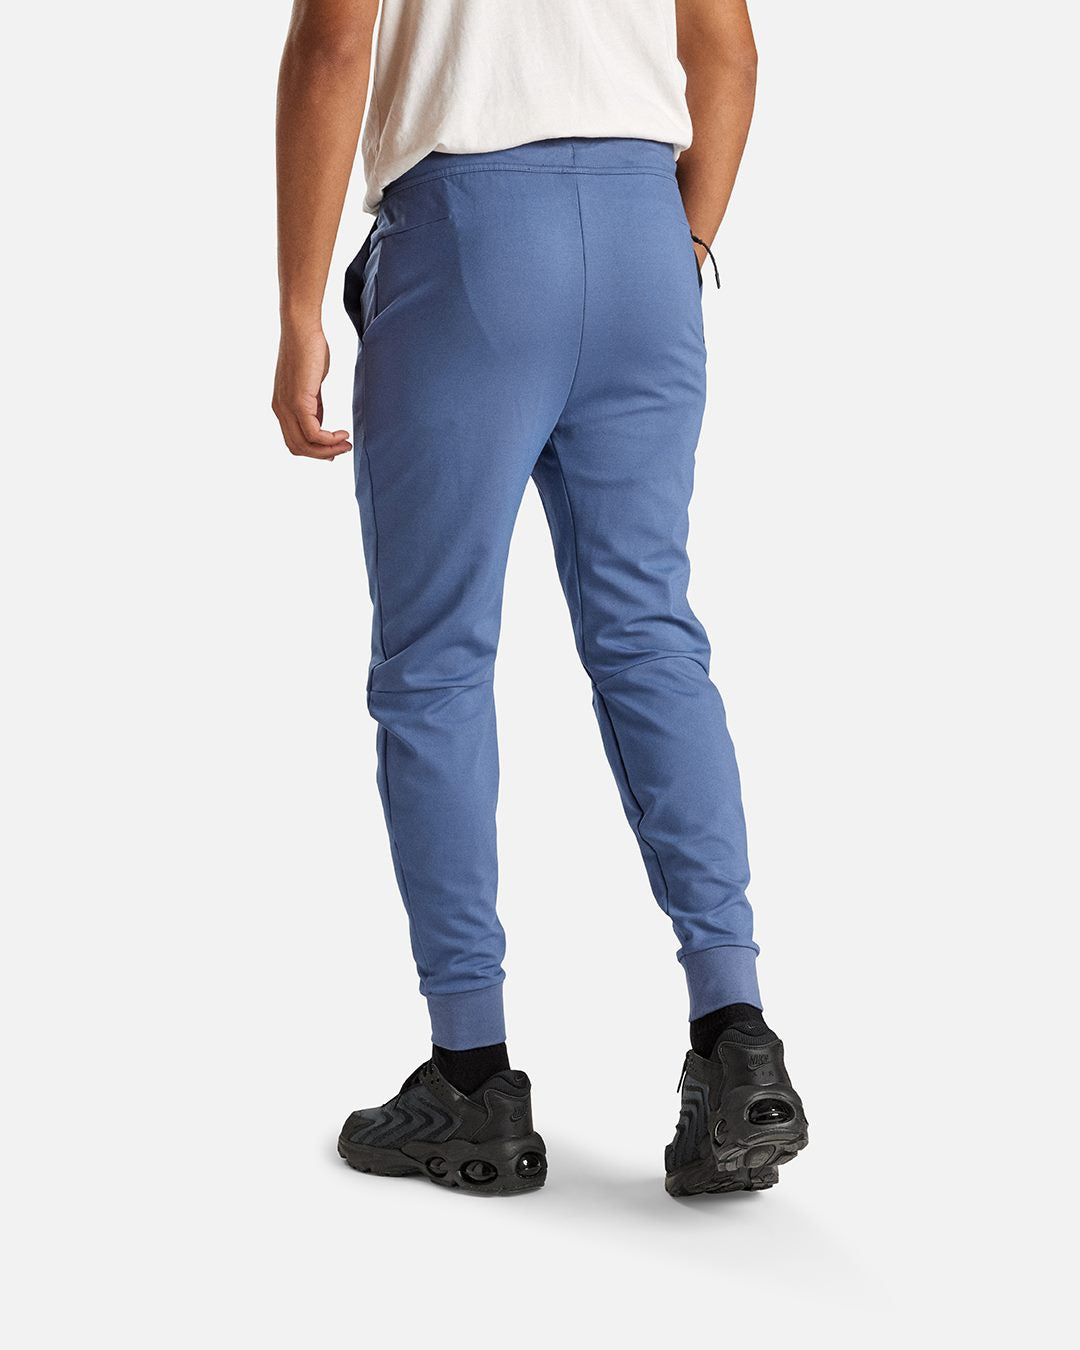 Pantalon Nike Tech Fleece Lightweight – Blau/Schwarz